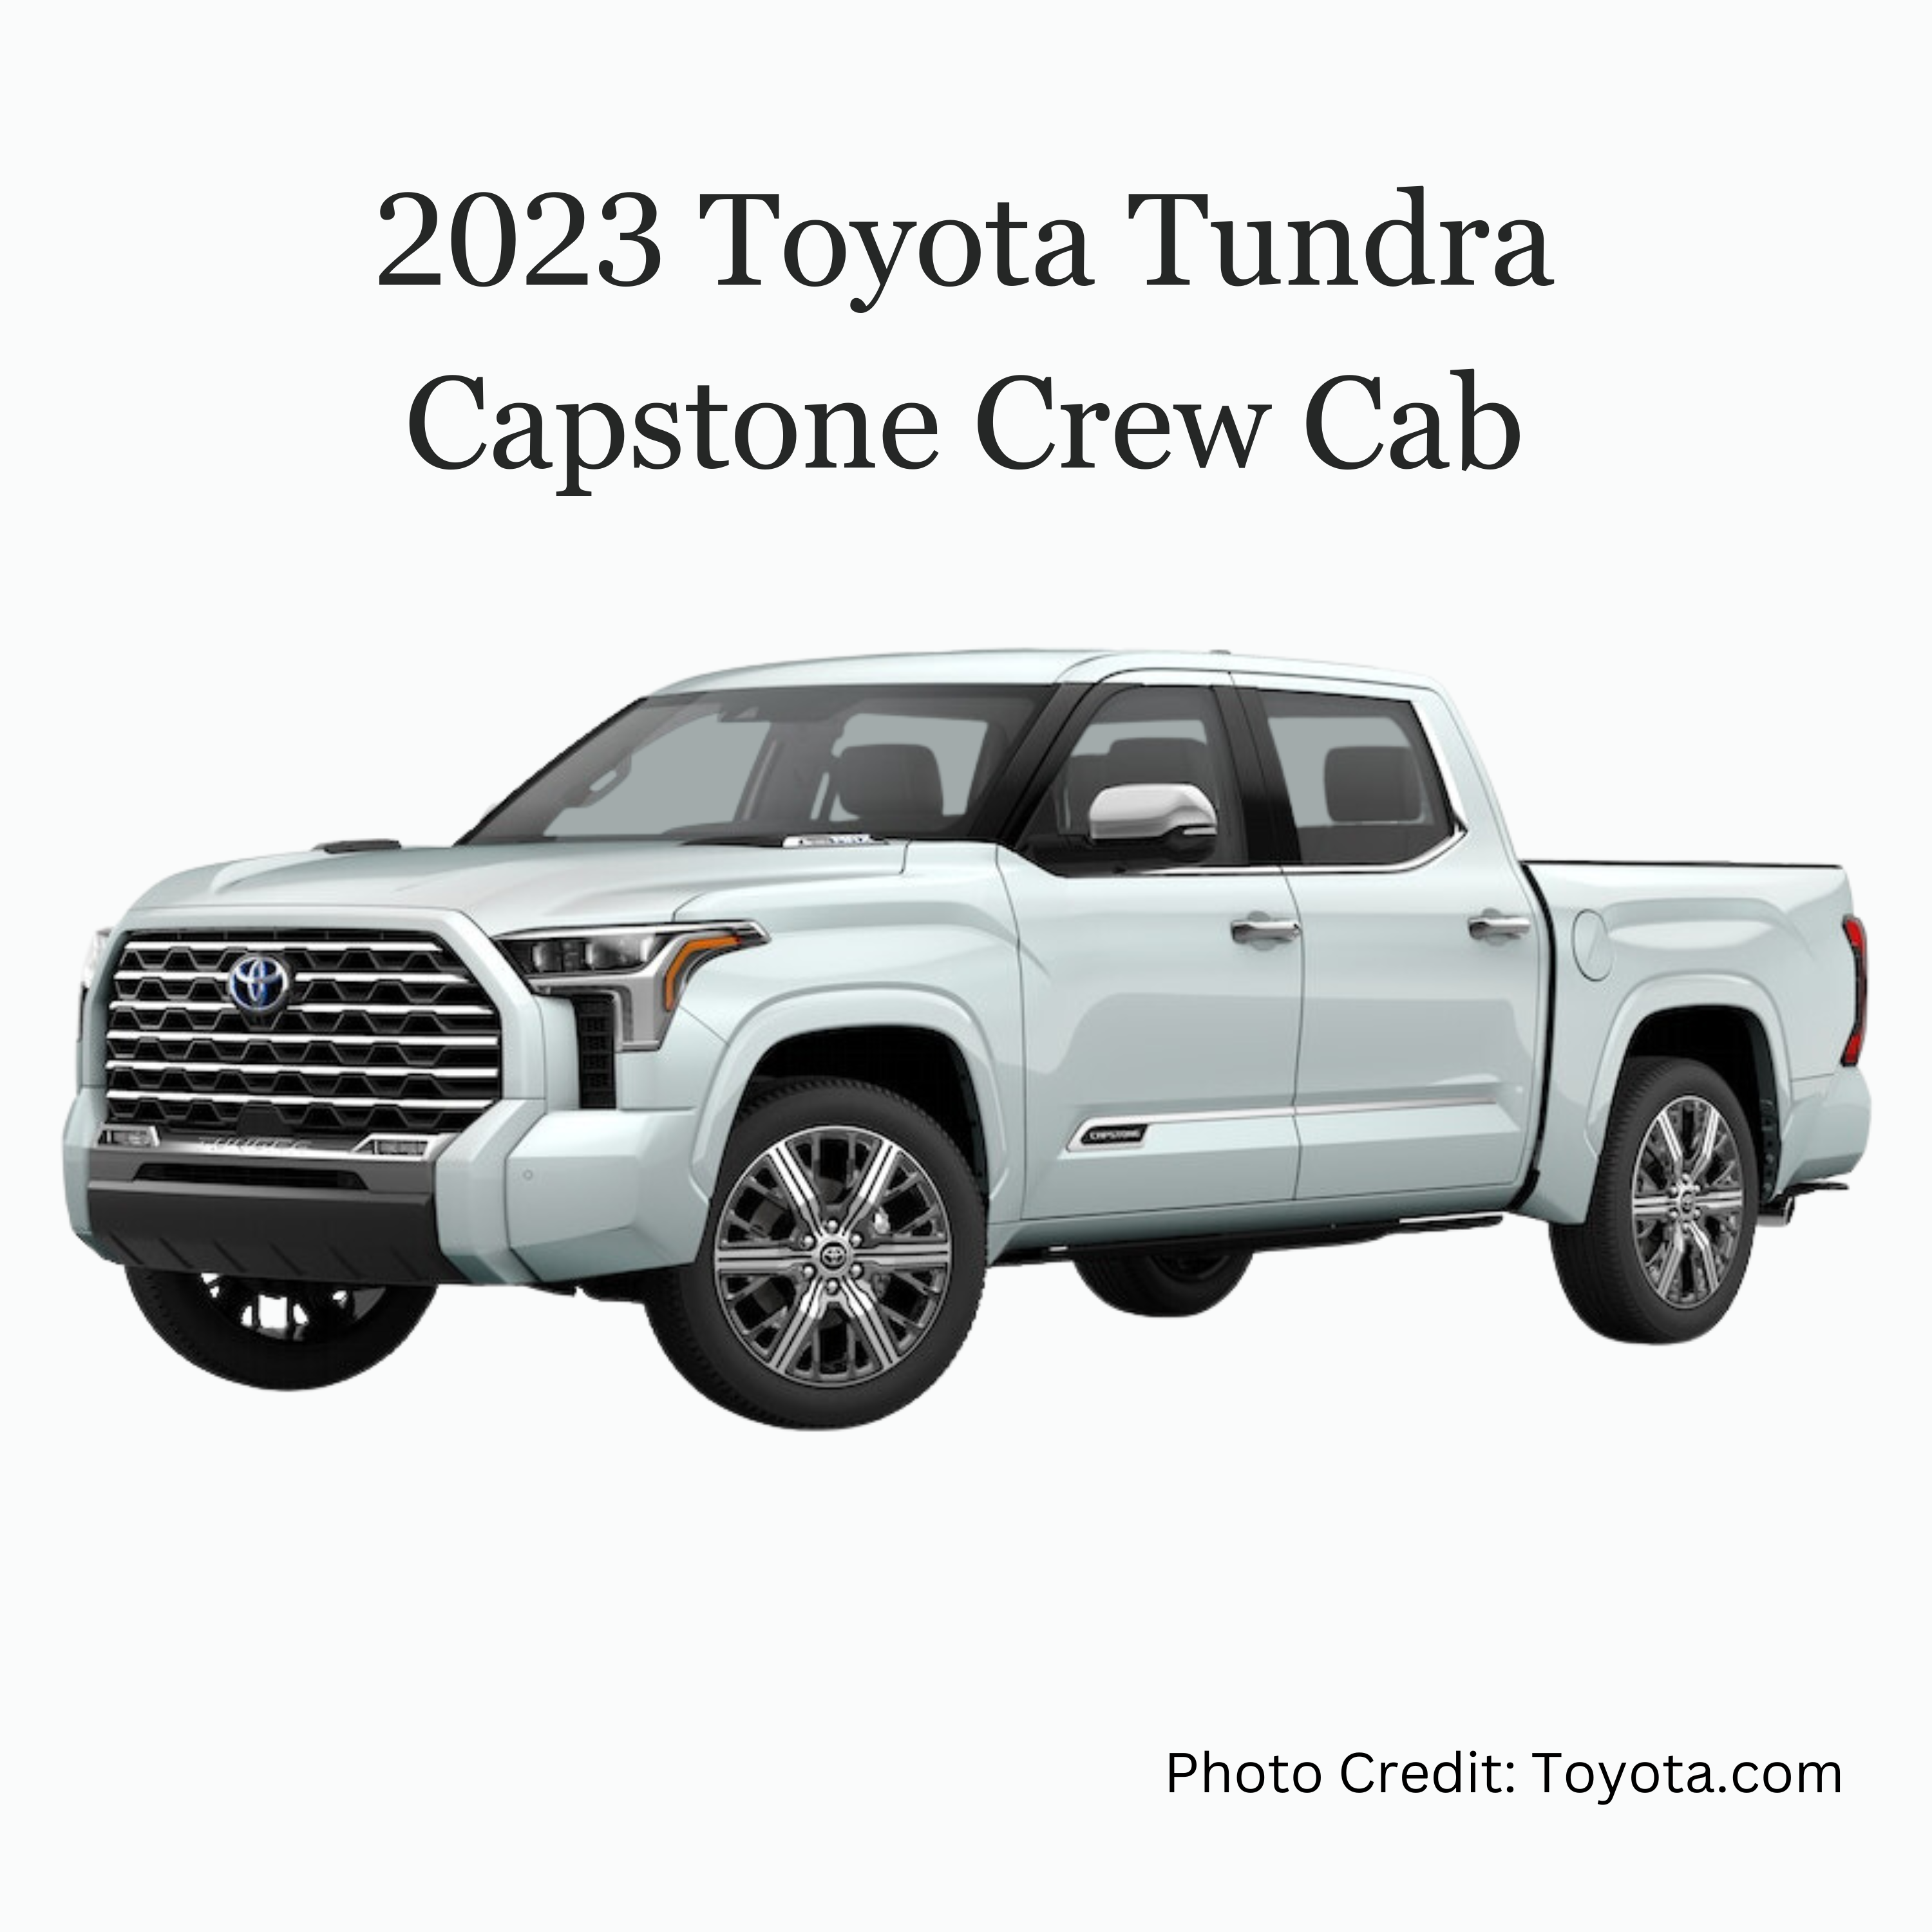 2023 Toyota Tundra Capstone Crew Cab Review 